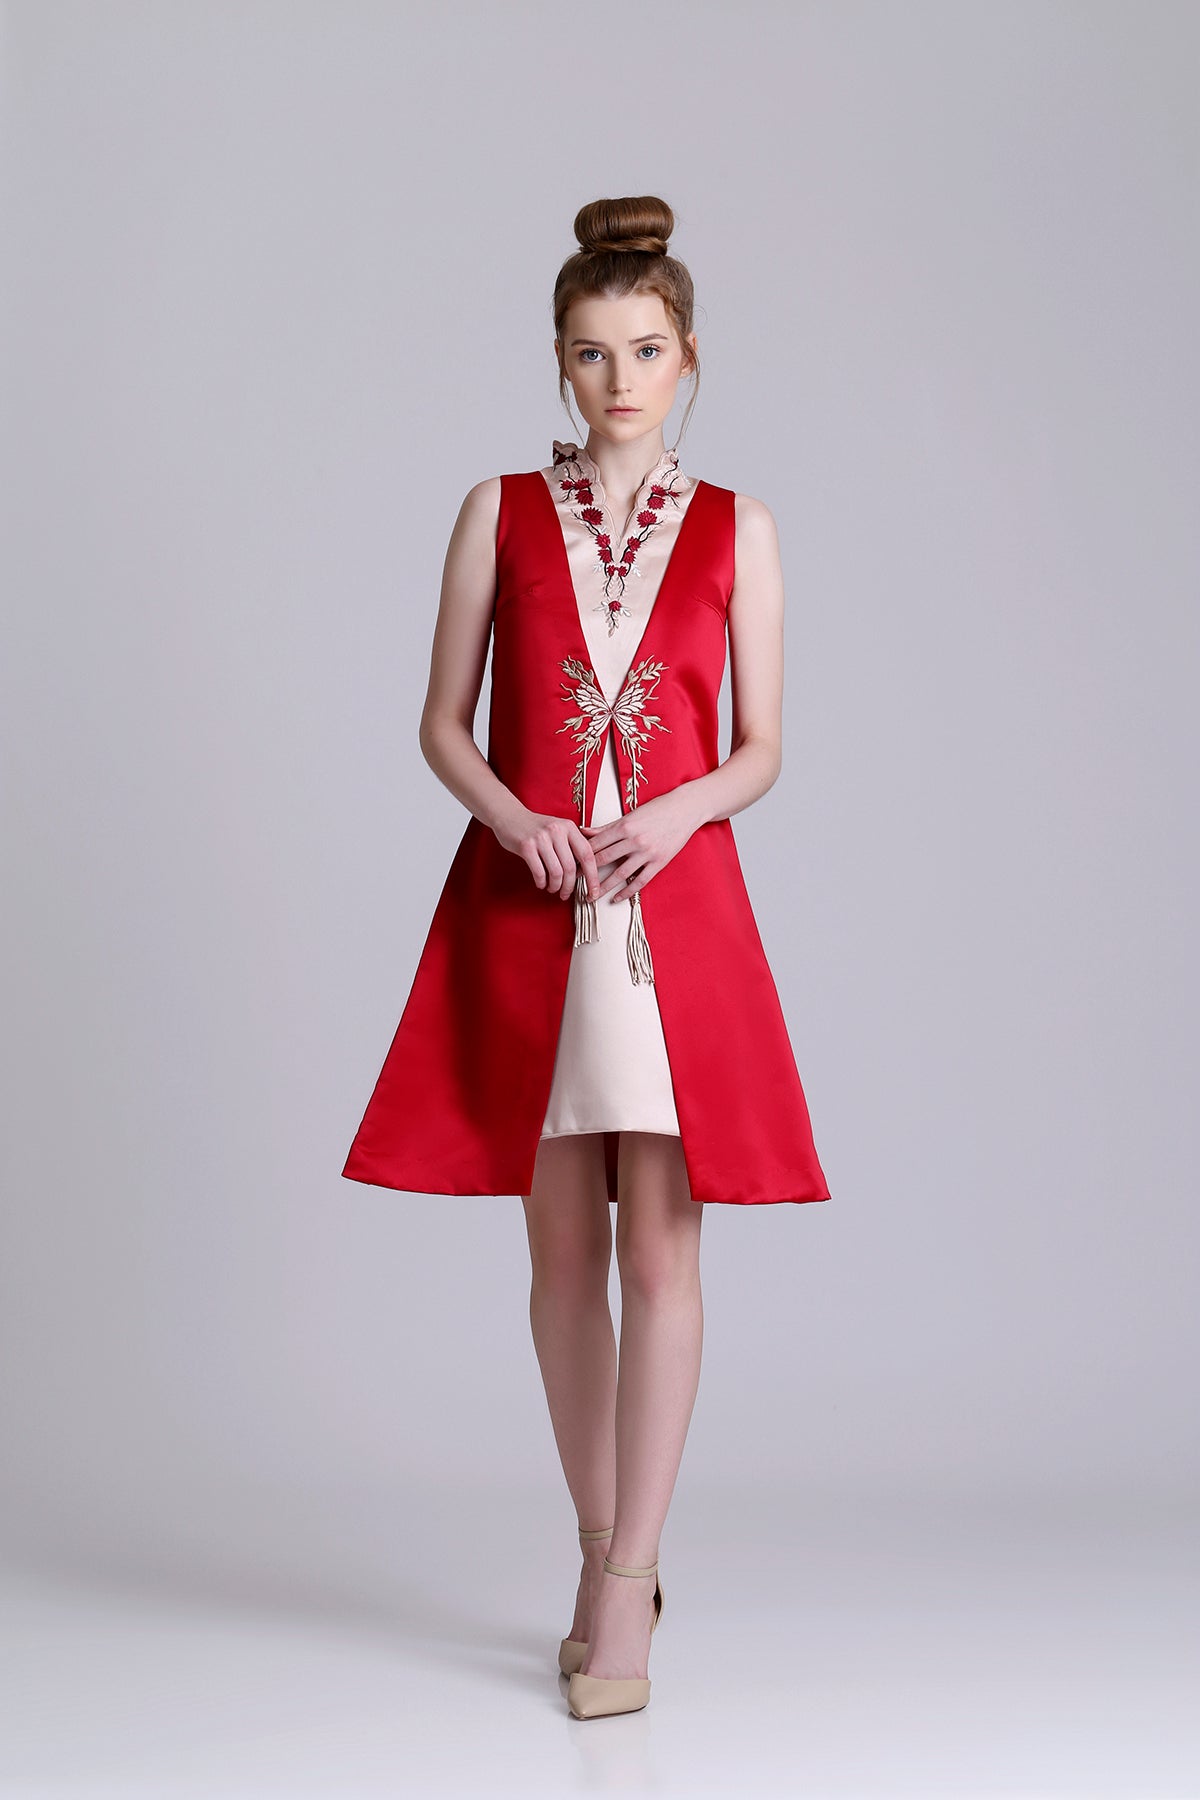 MING Dress (red)